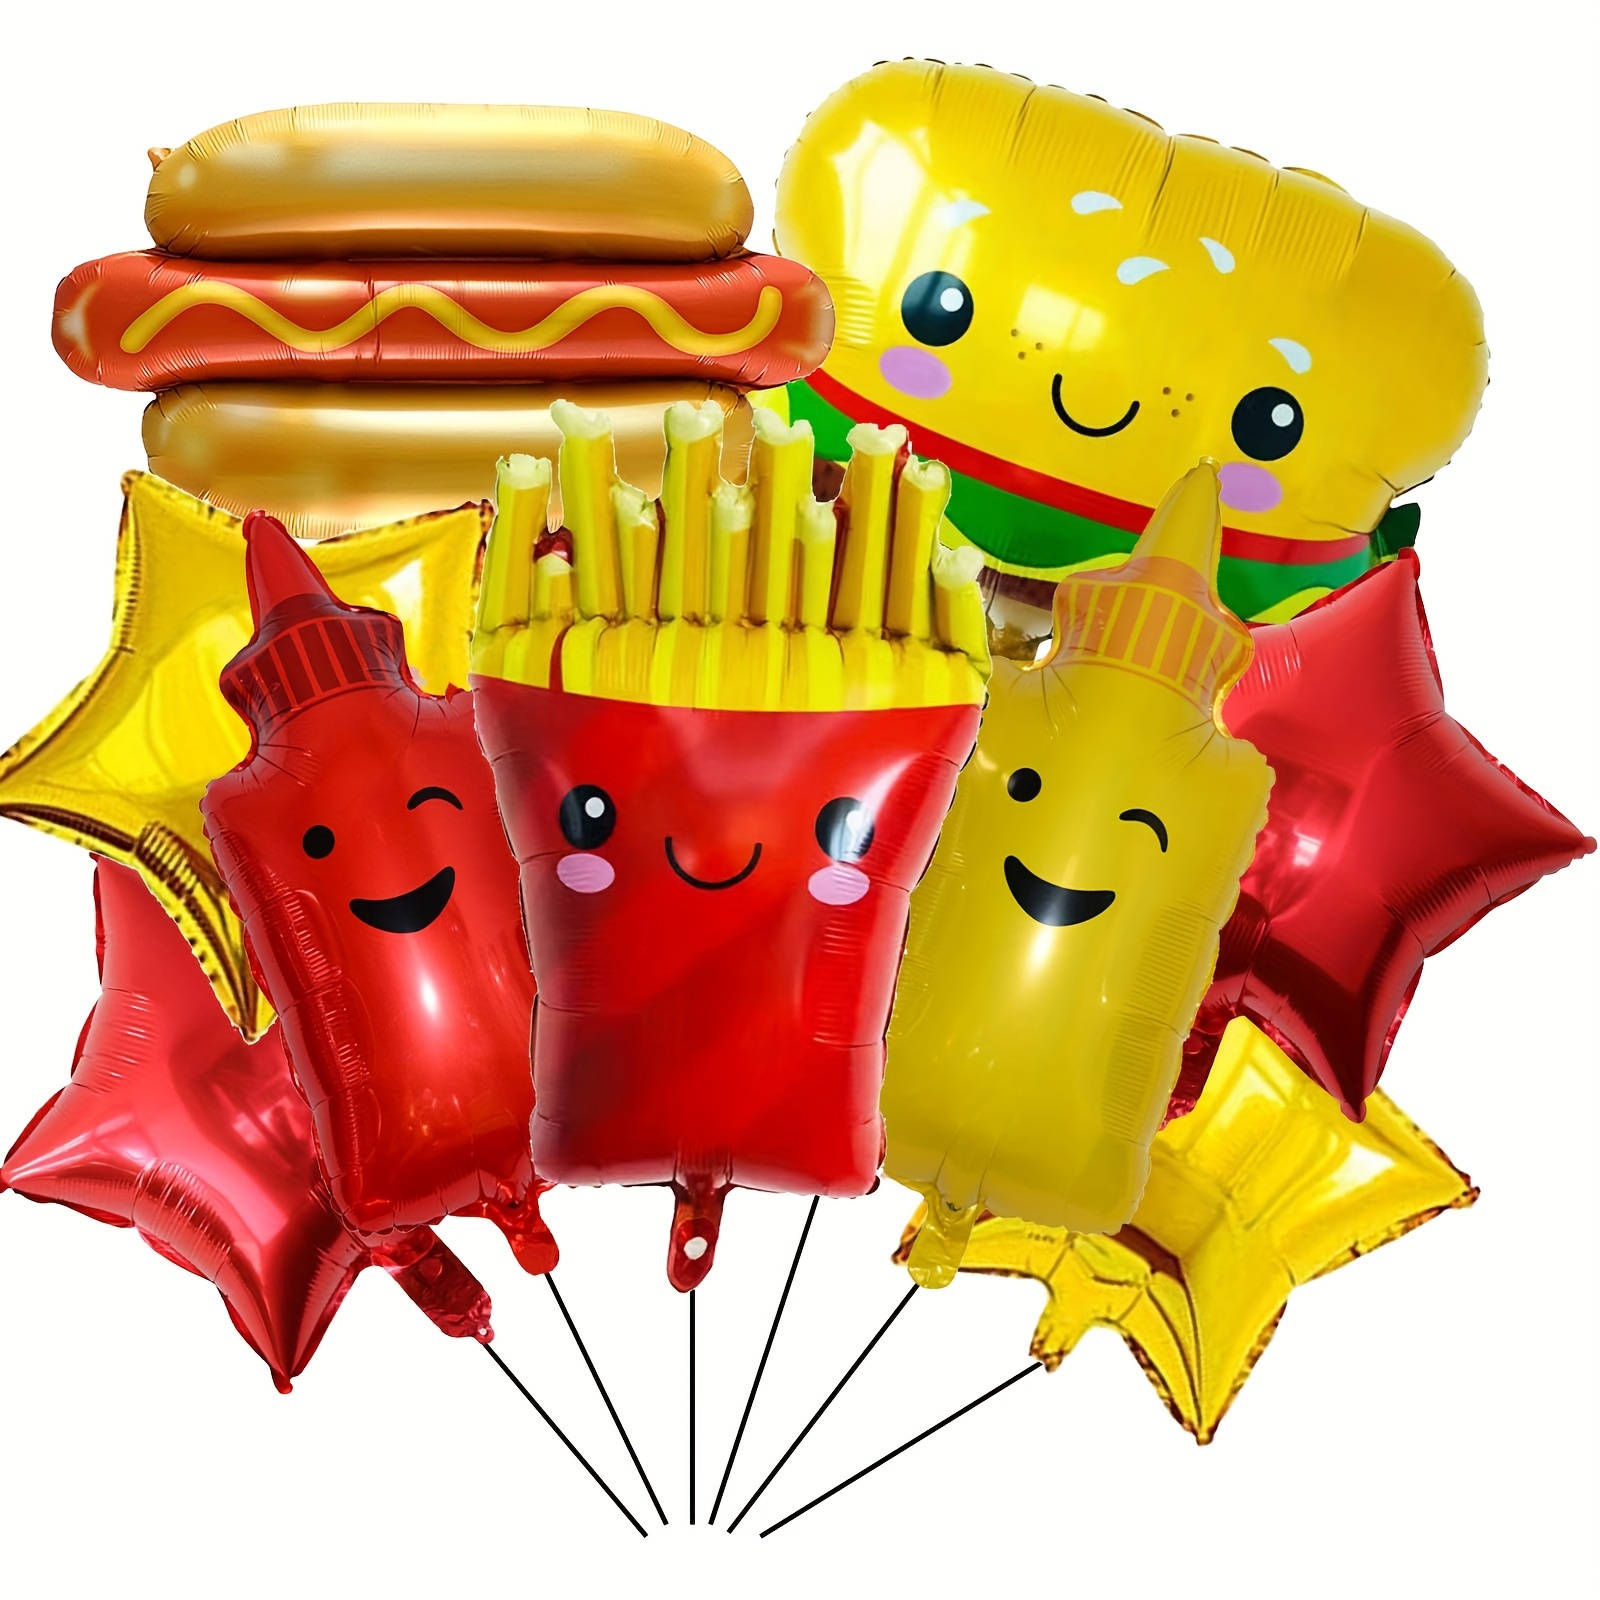 

9-piece Food-themed Foil Balloons Set - Hamburger, Hot Dog, Ketchup & Mustard Bottles For Bbq Parties, Picnics & Birthdays - Vibrant Party Decorations